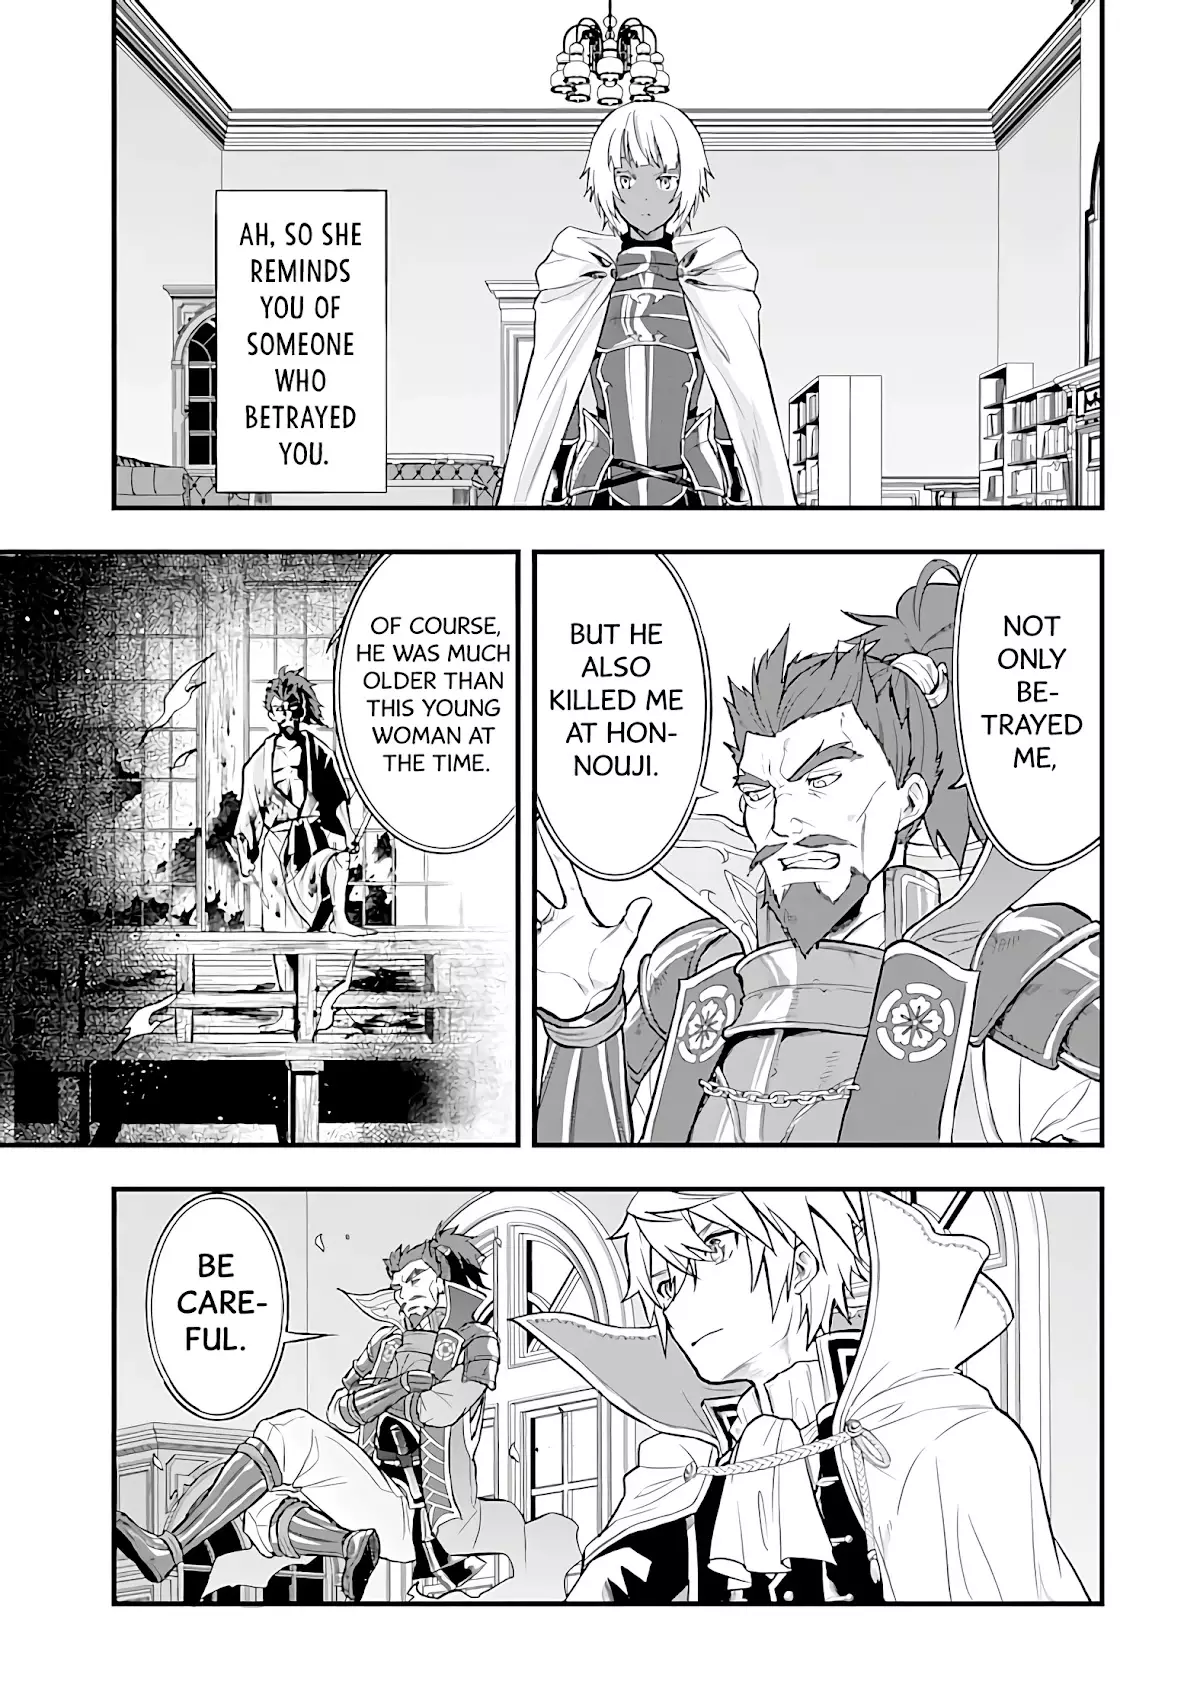 Mysterious Job Called Oda Nobunaga - 18 page 13-e581ca37